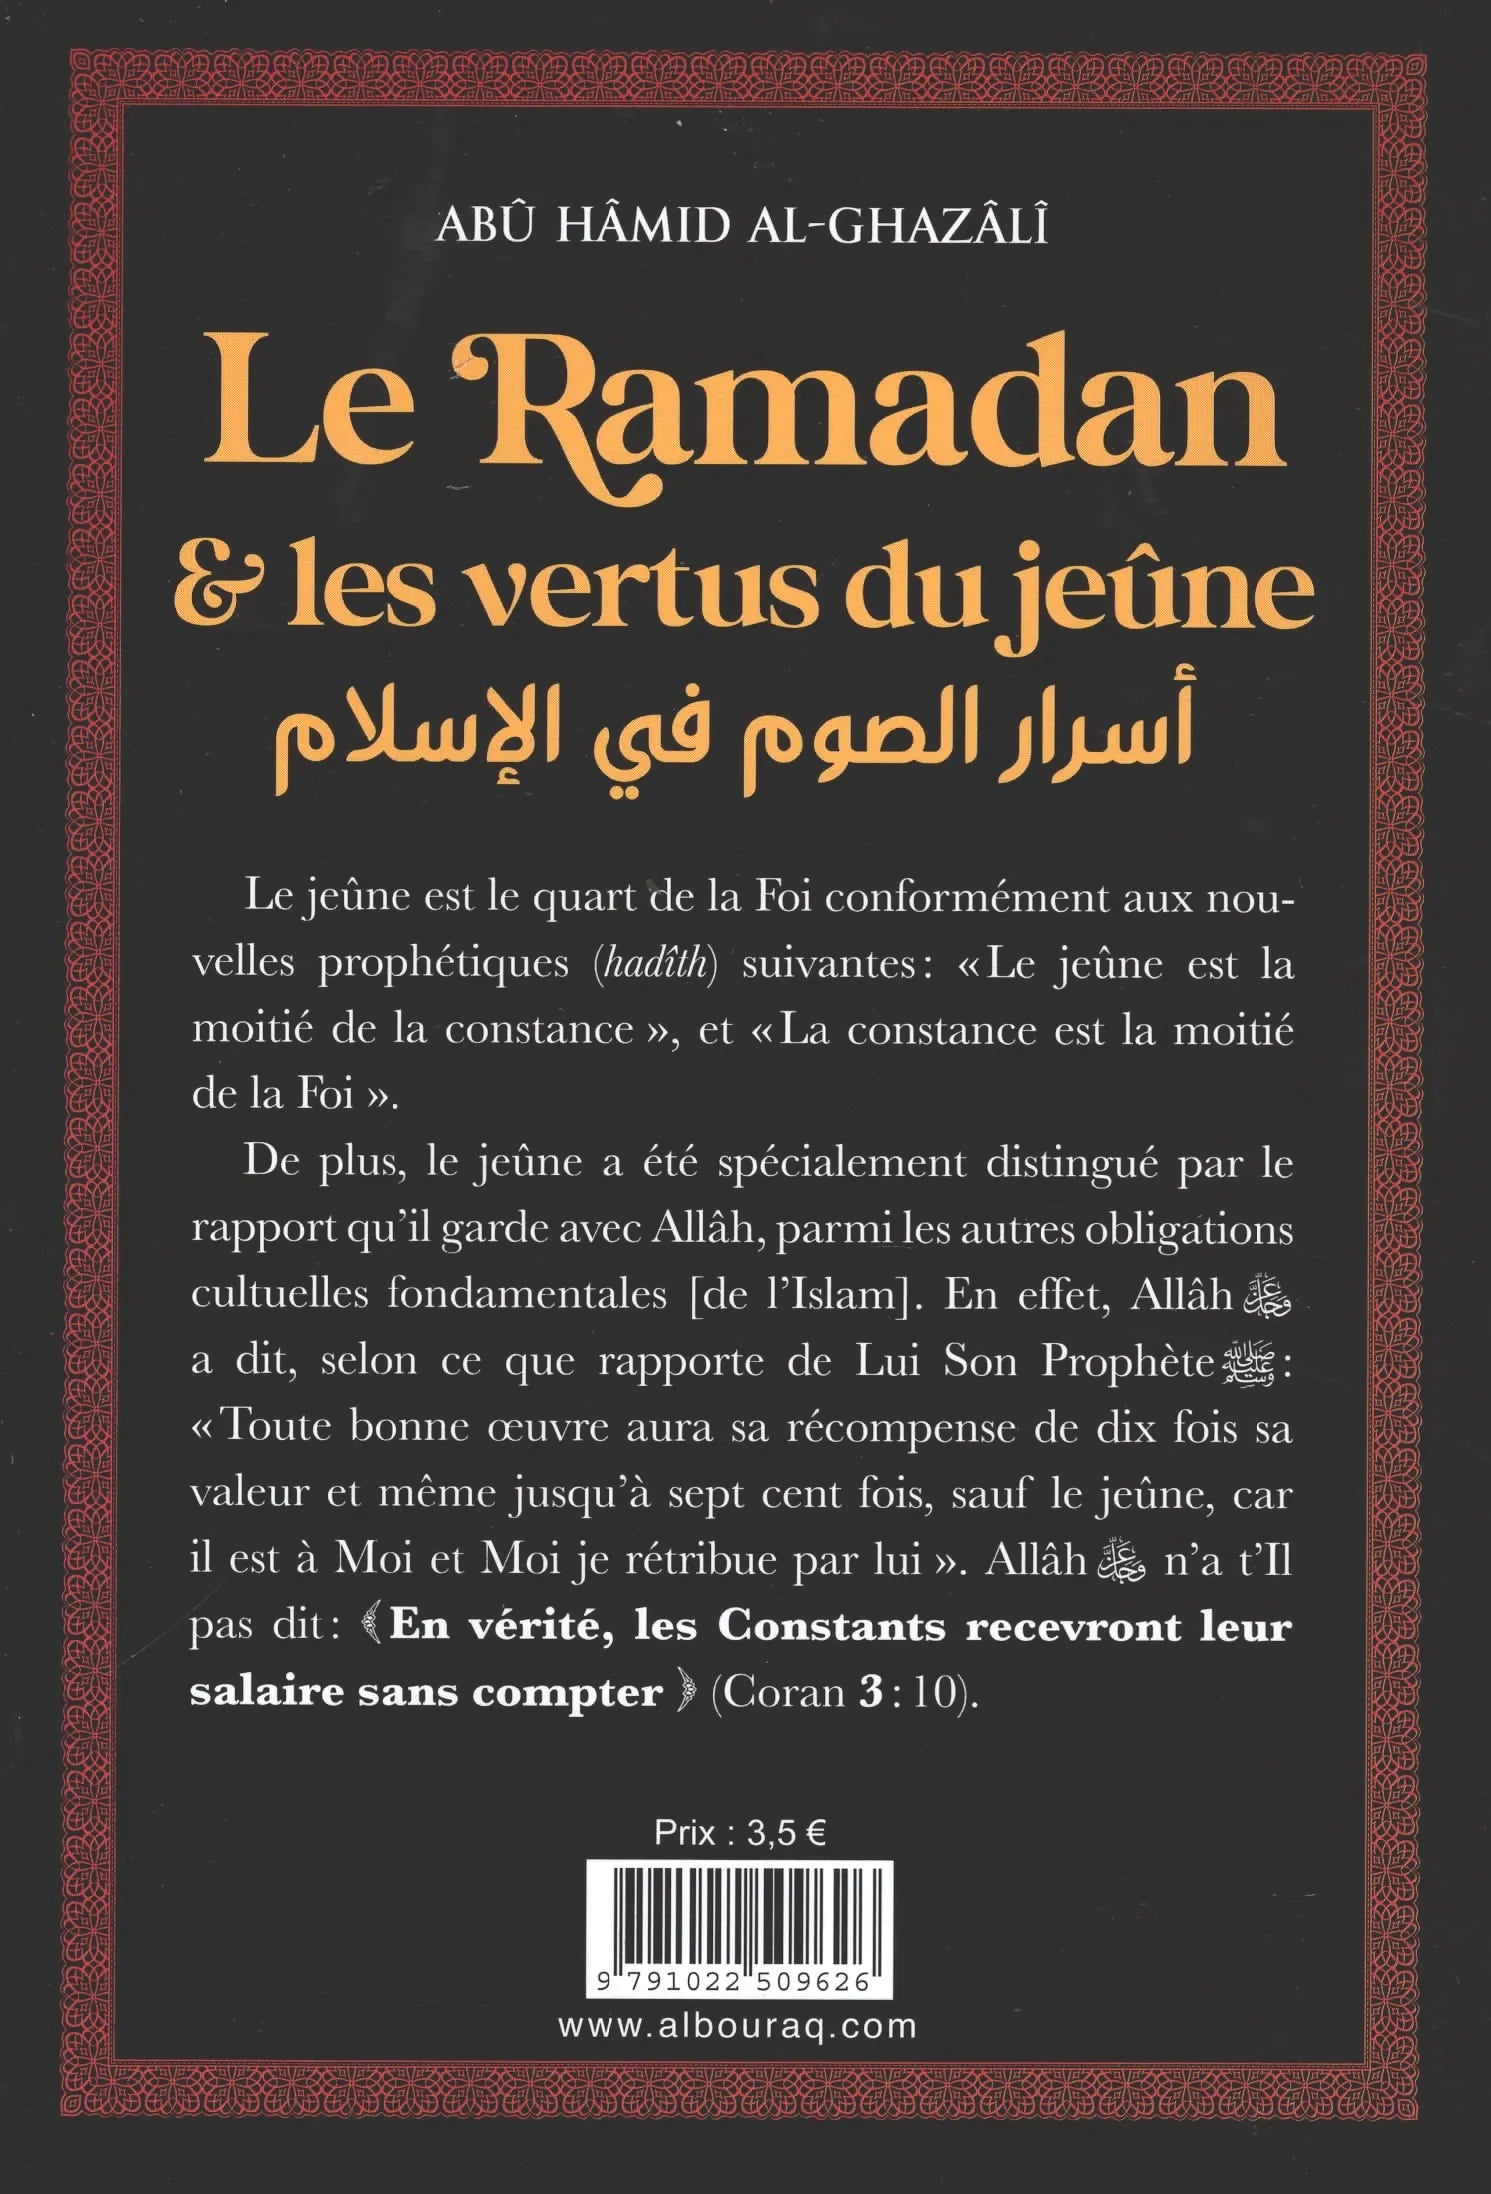 Le Ramadan & les vertus du jeûne par Abu Hamid Al-Ghazali Brun Verso Albouraq